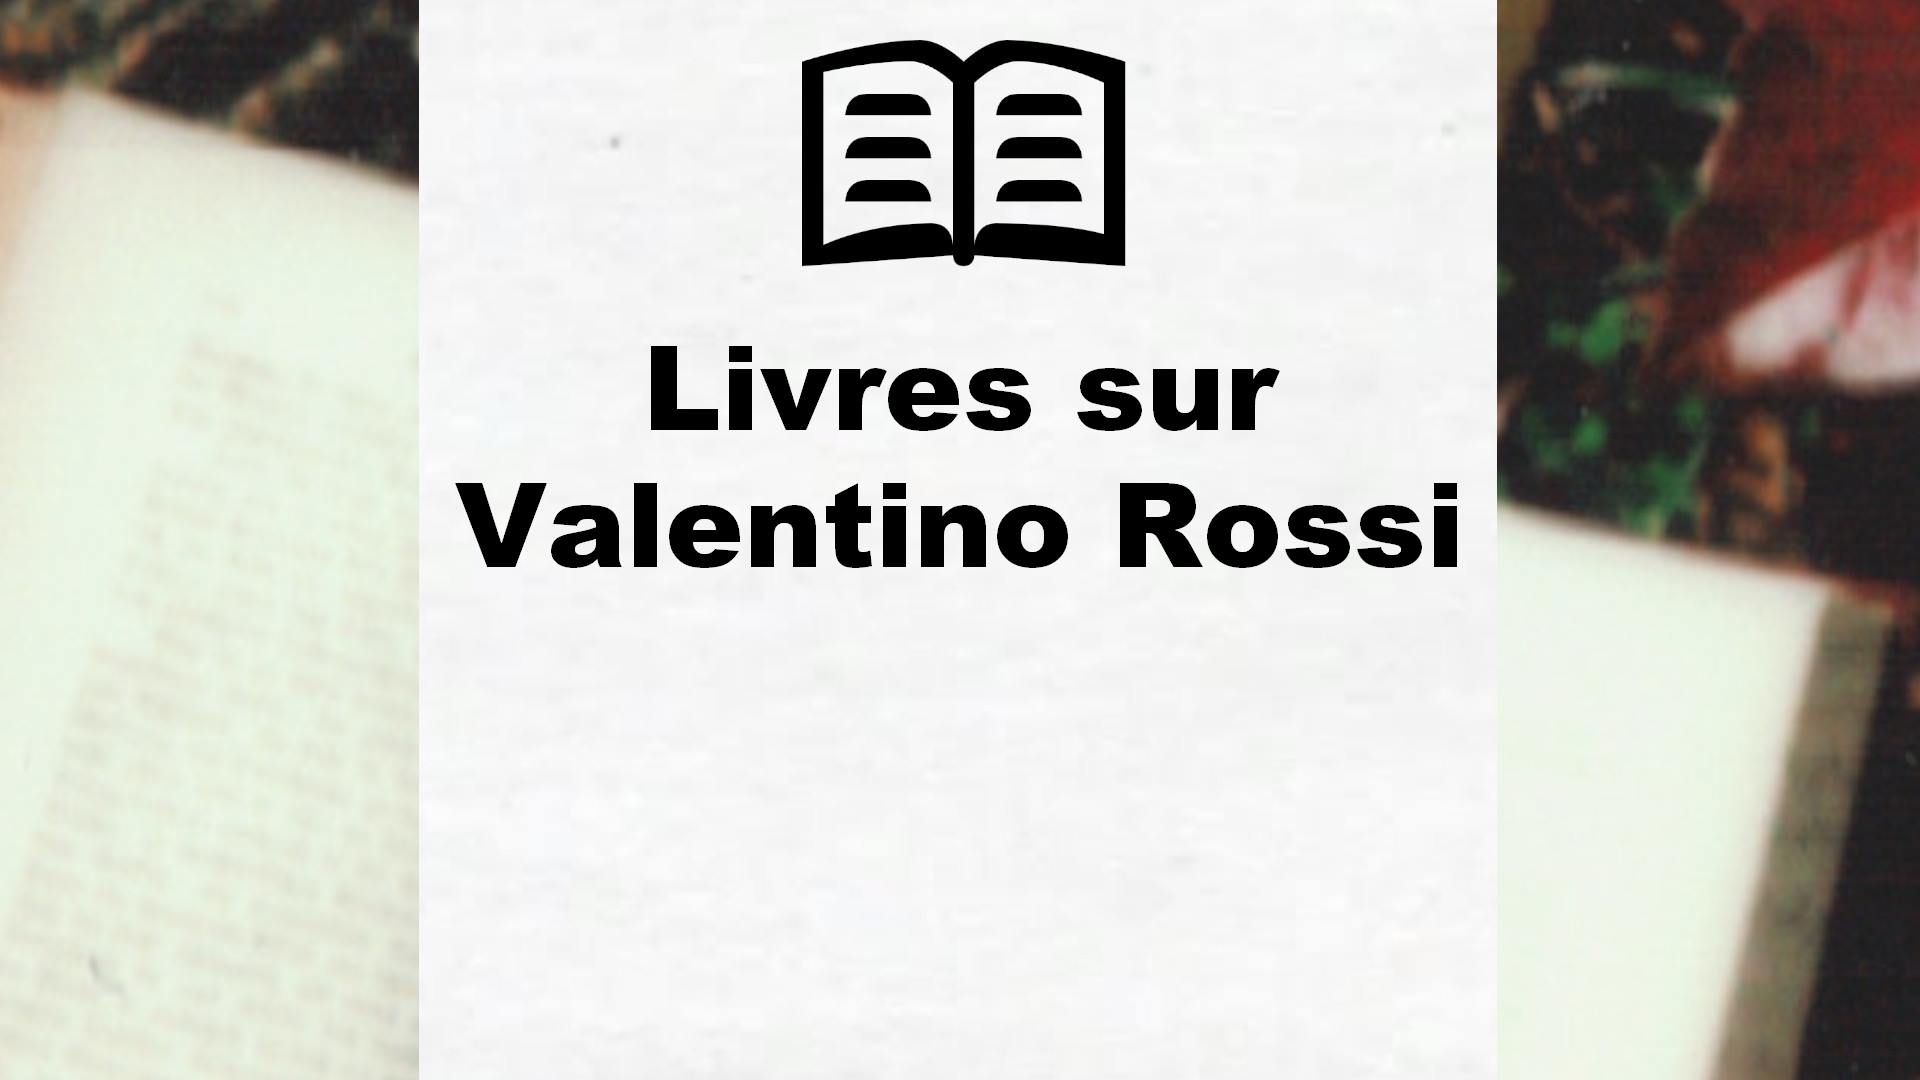 Livres sur Valentino Rossi